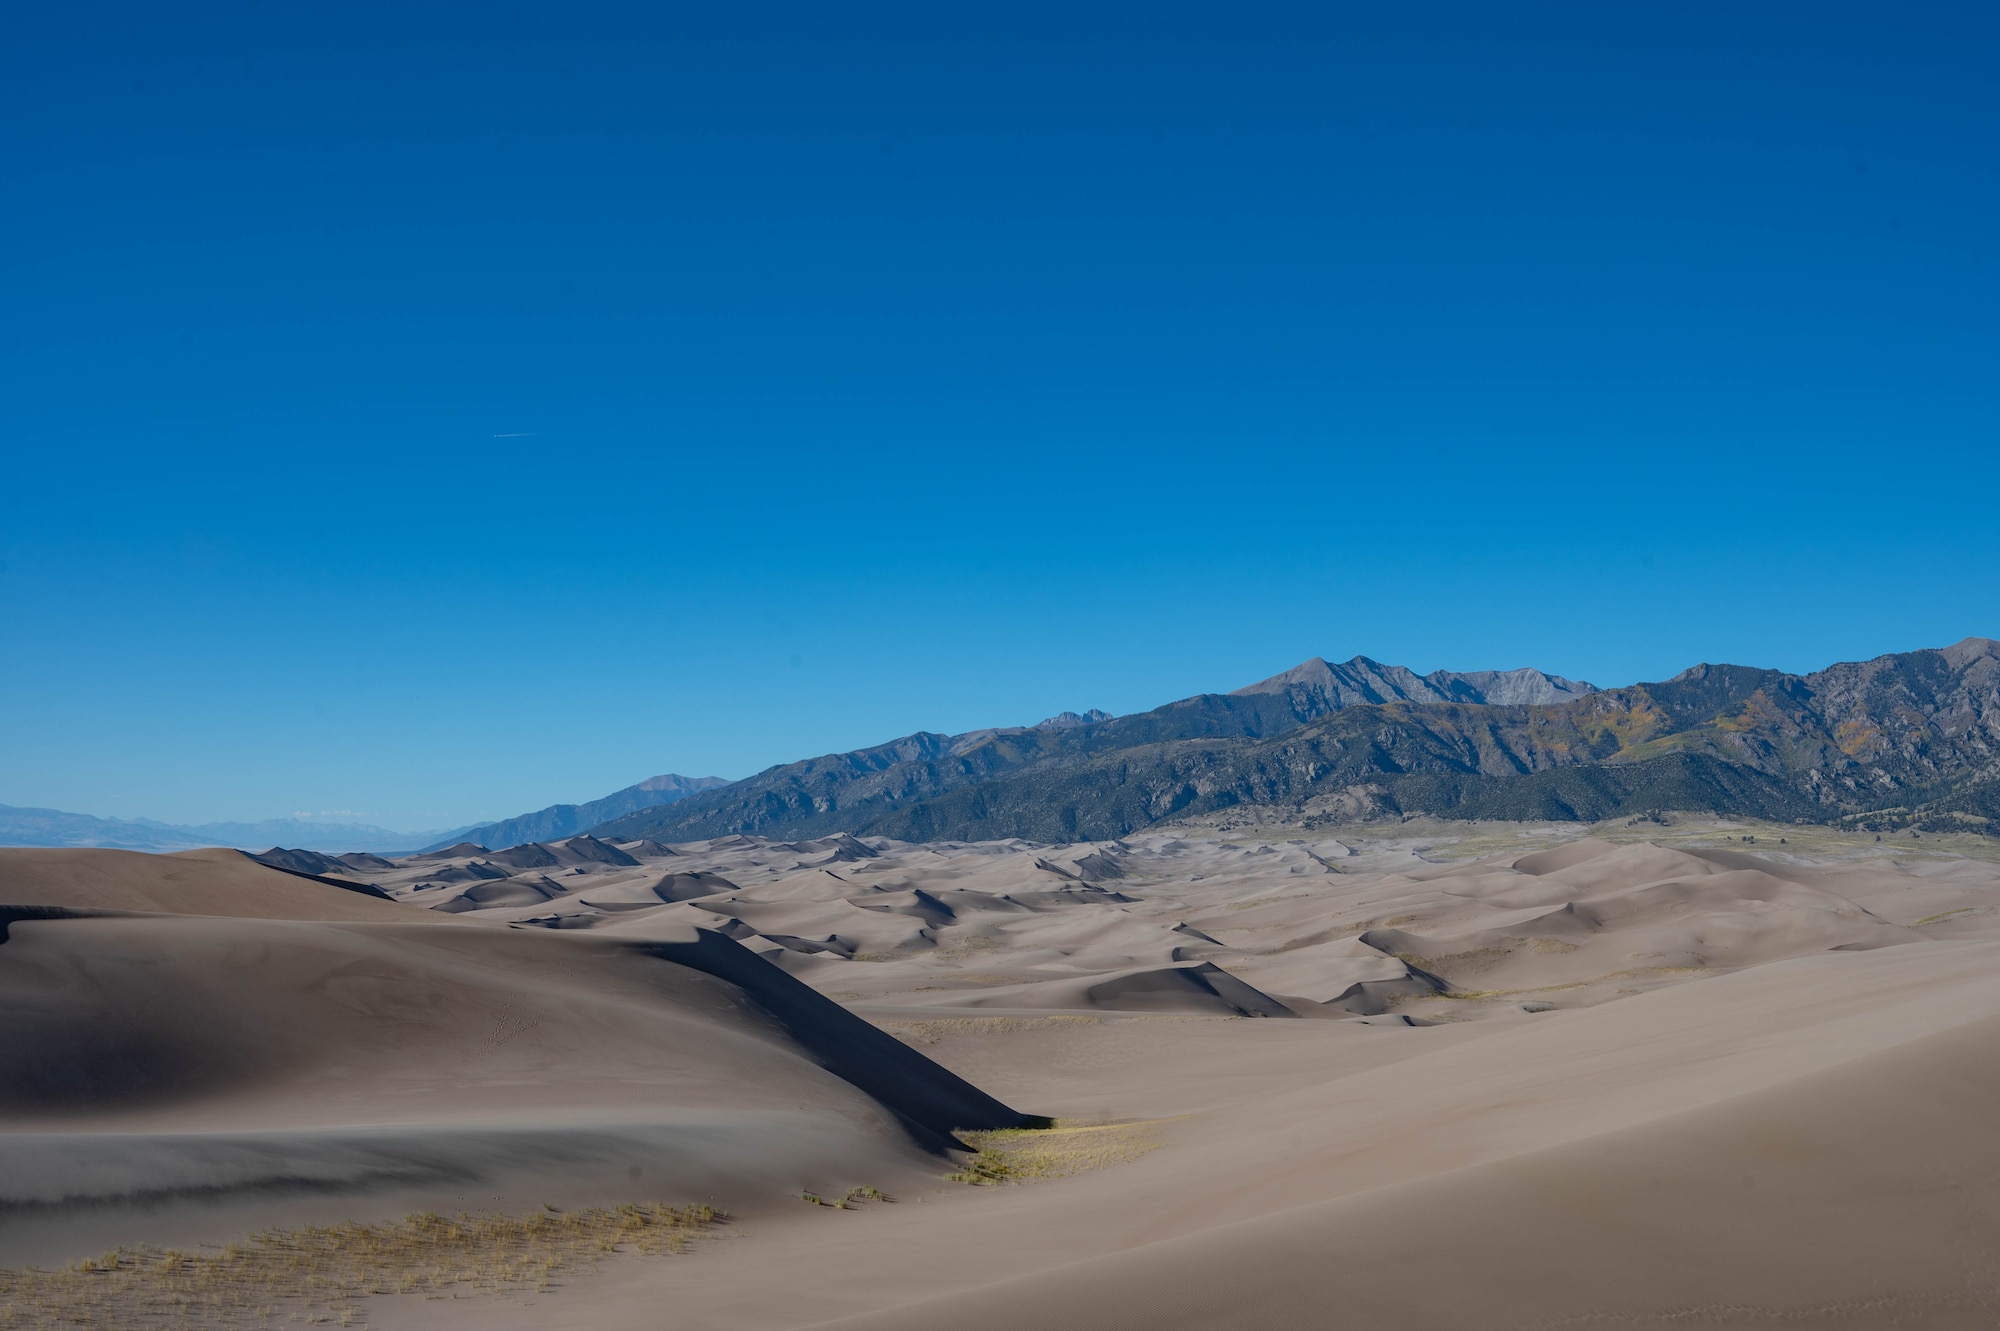 Sand dunes meet the Sangre De Cristo Mountain range of the Rocky Mountains.